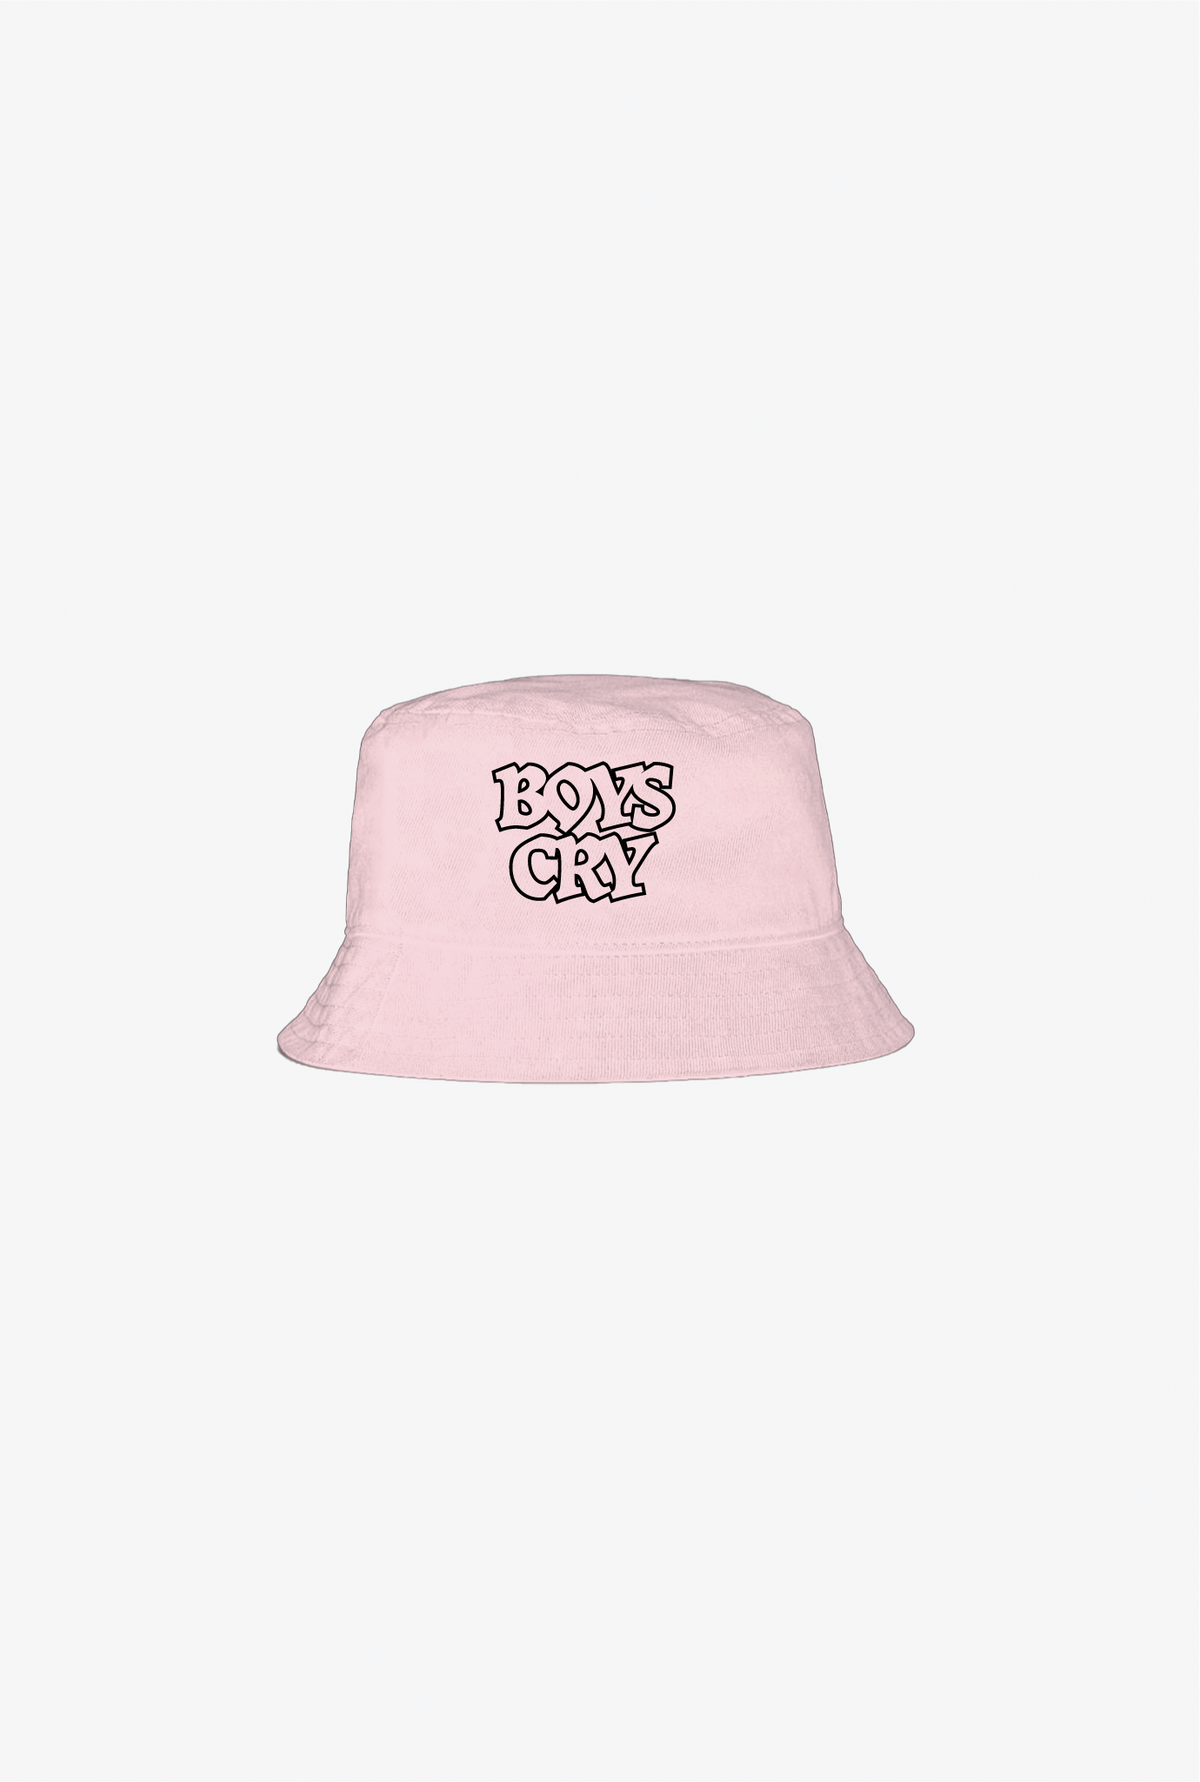 Boys Cry Bucket Hat - Pink